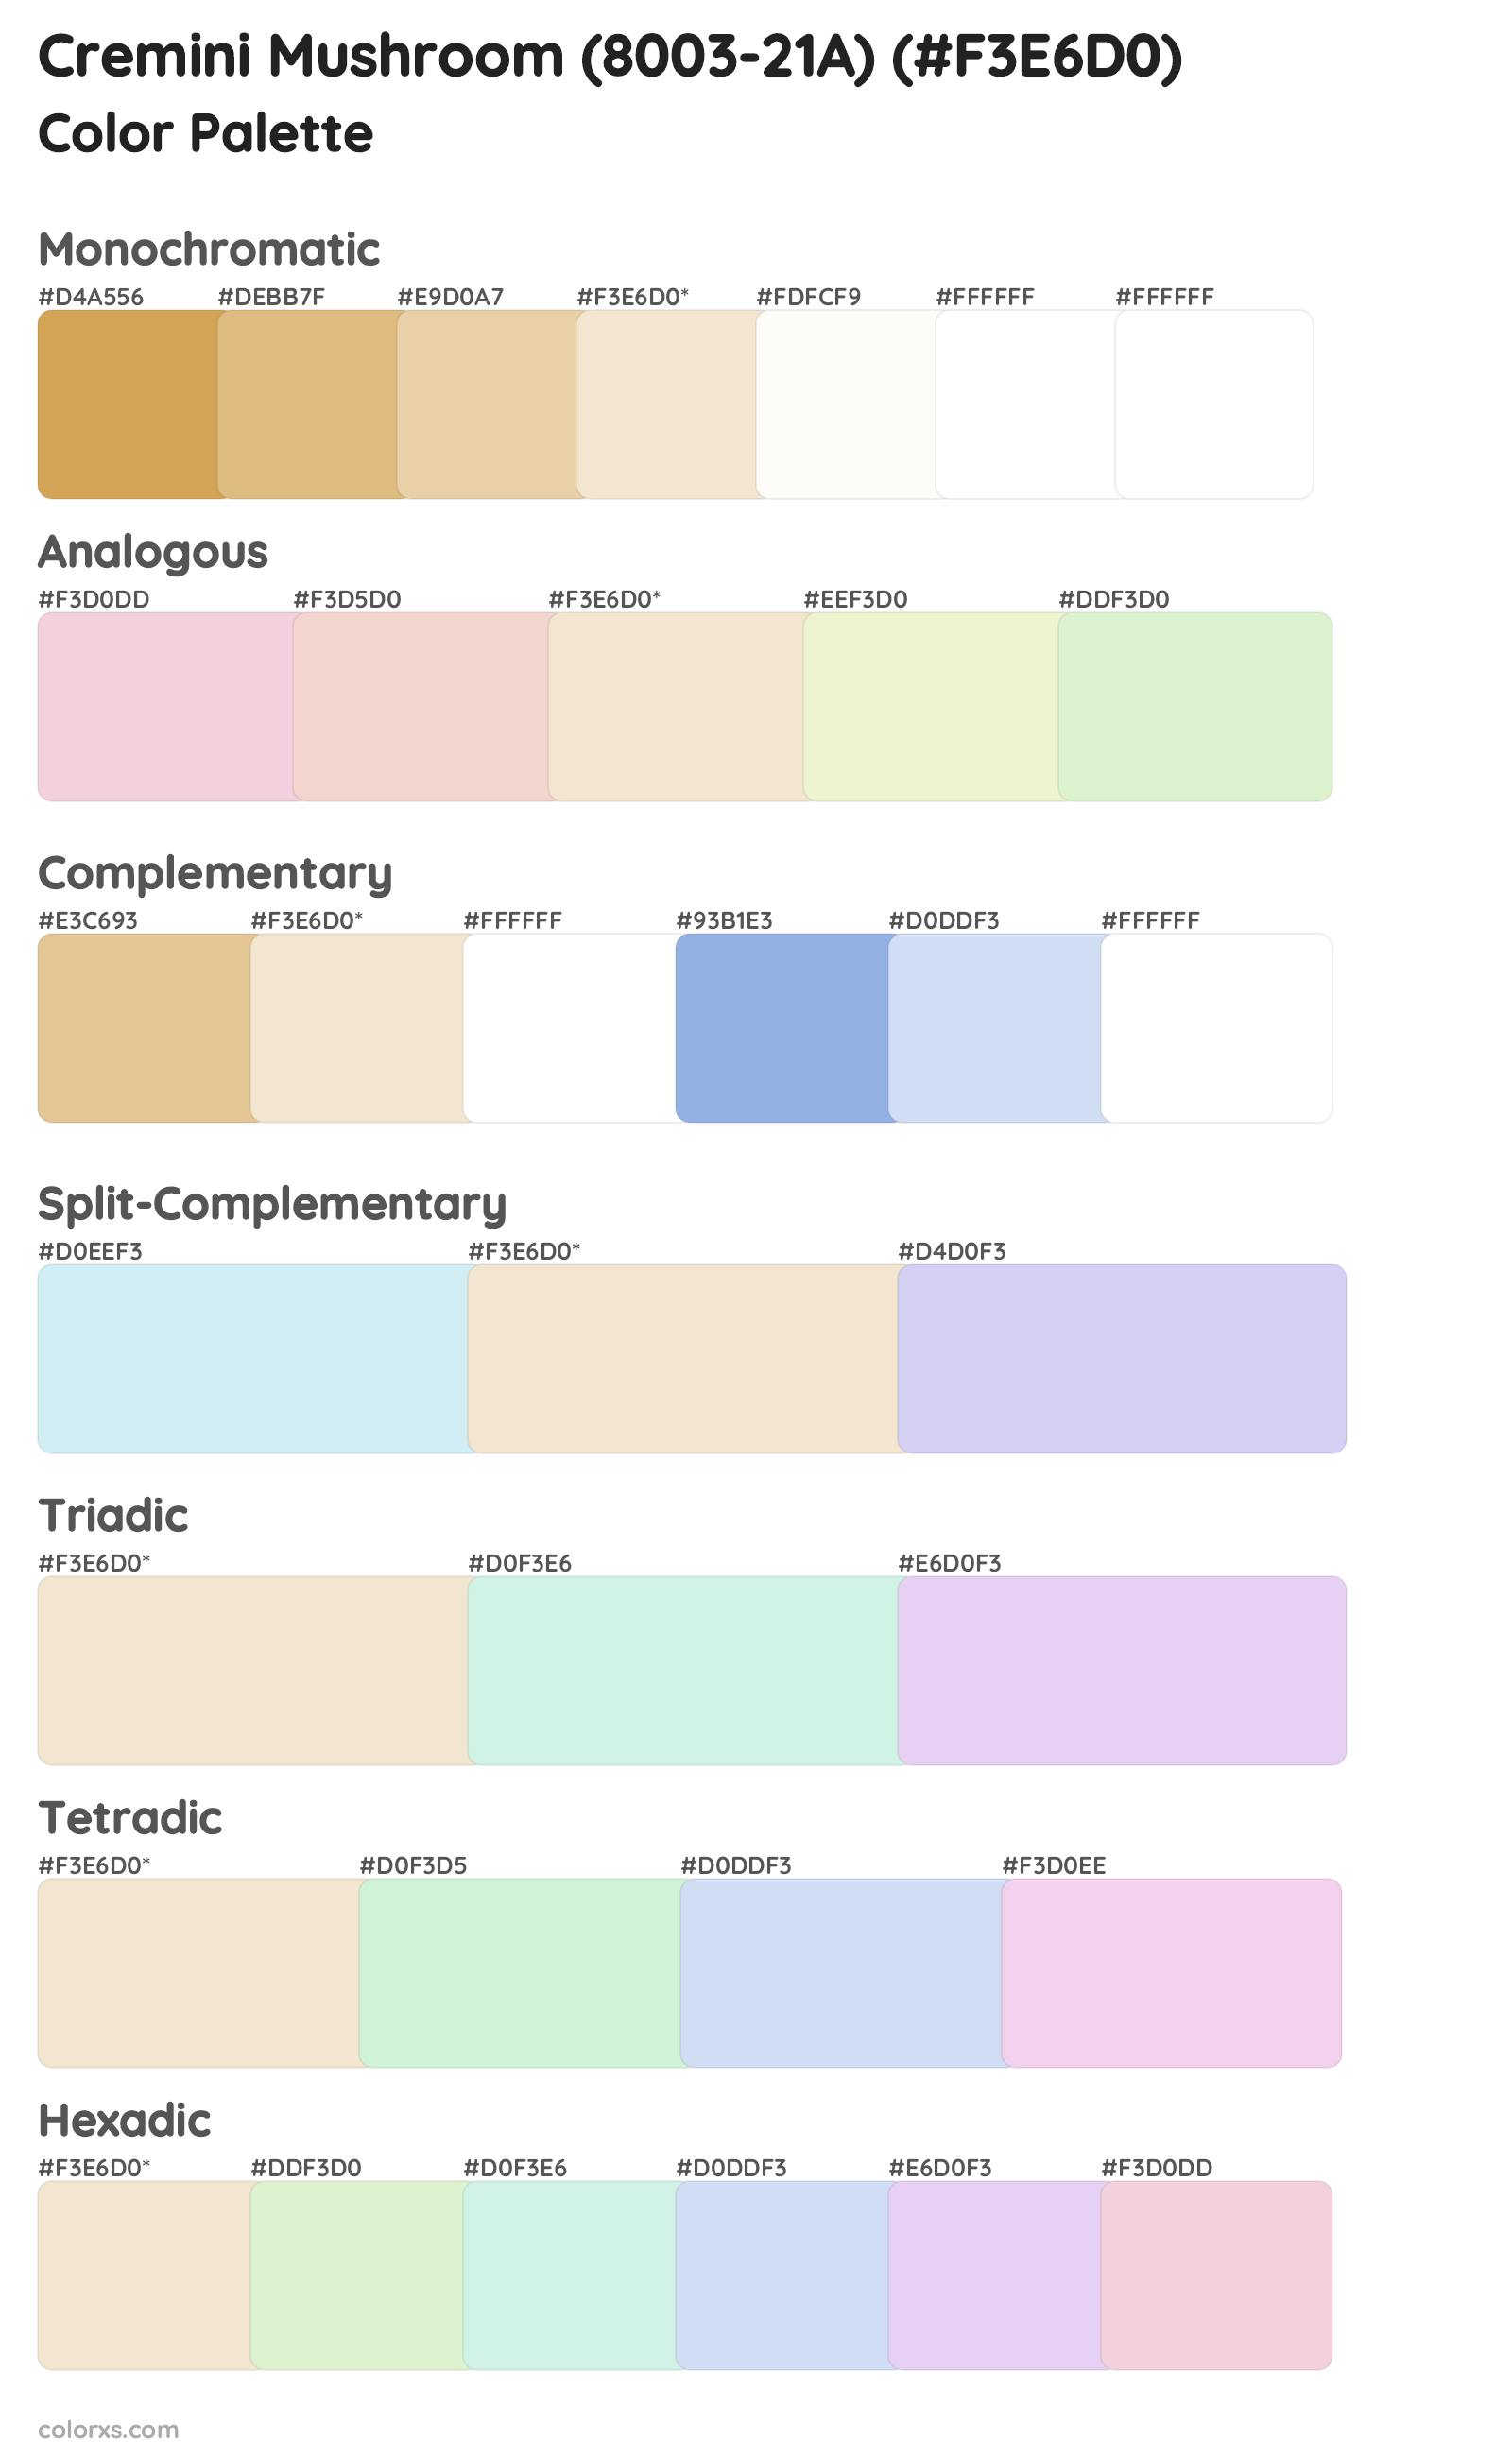 Cremini Mushroom (8003-21A) Color Scheme Palettes